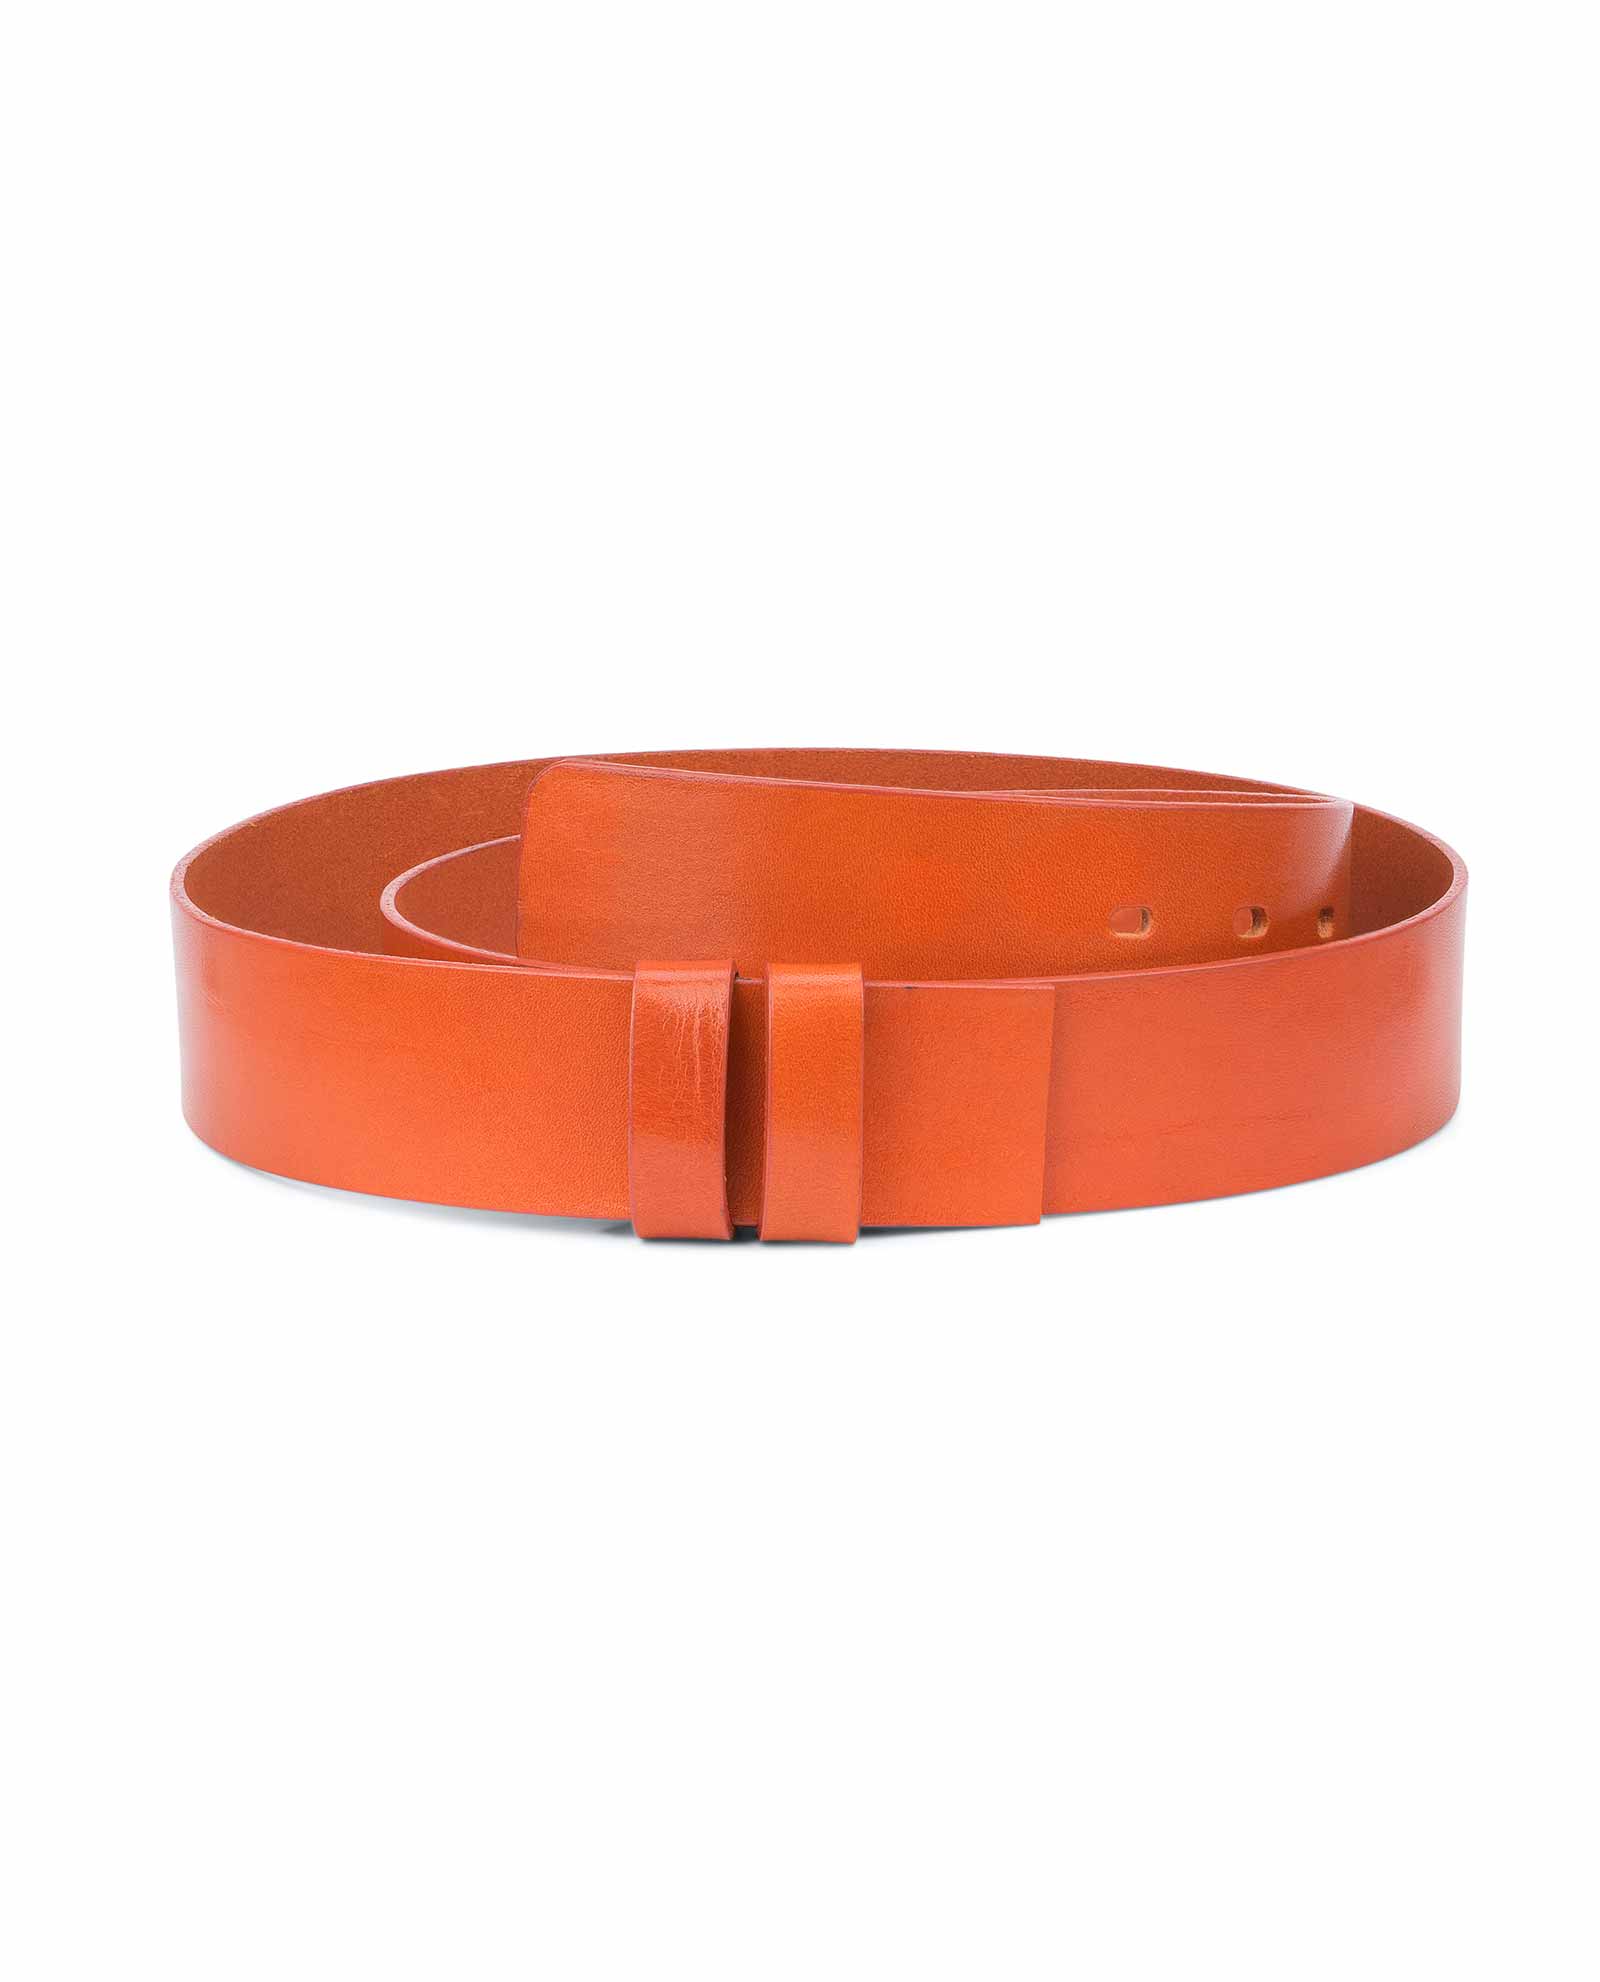 Buy Wide Belt No Buckle | Brown Veg Tan Leather | LeatherBeltsOnline.com